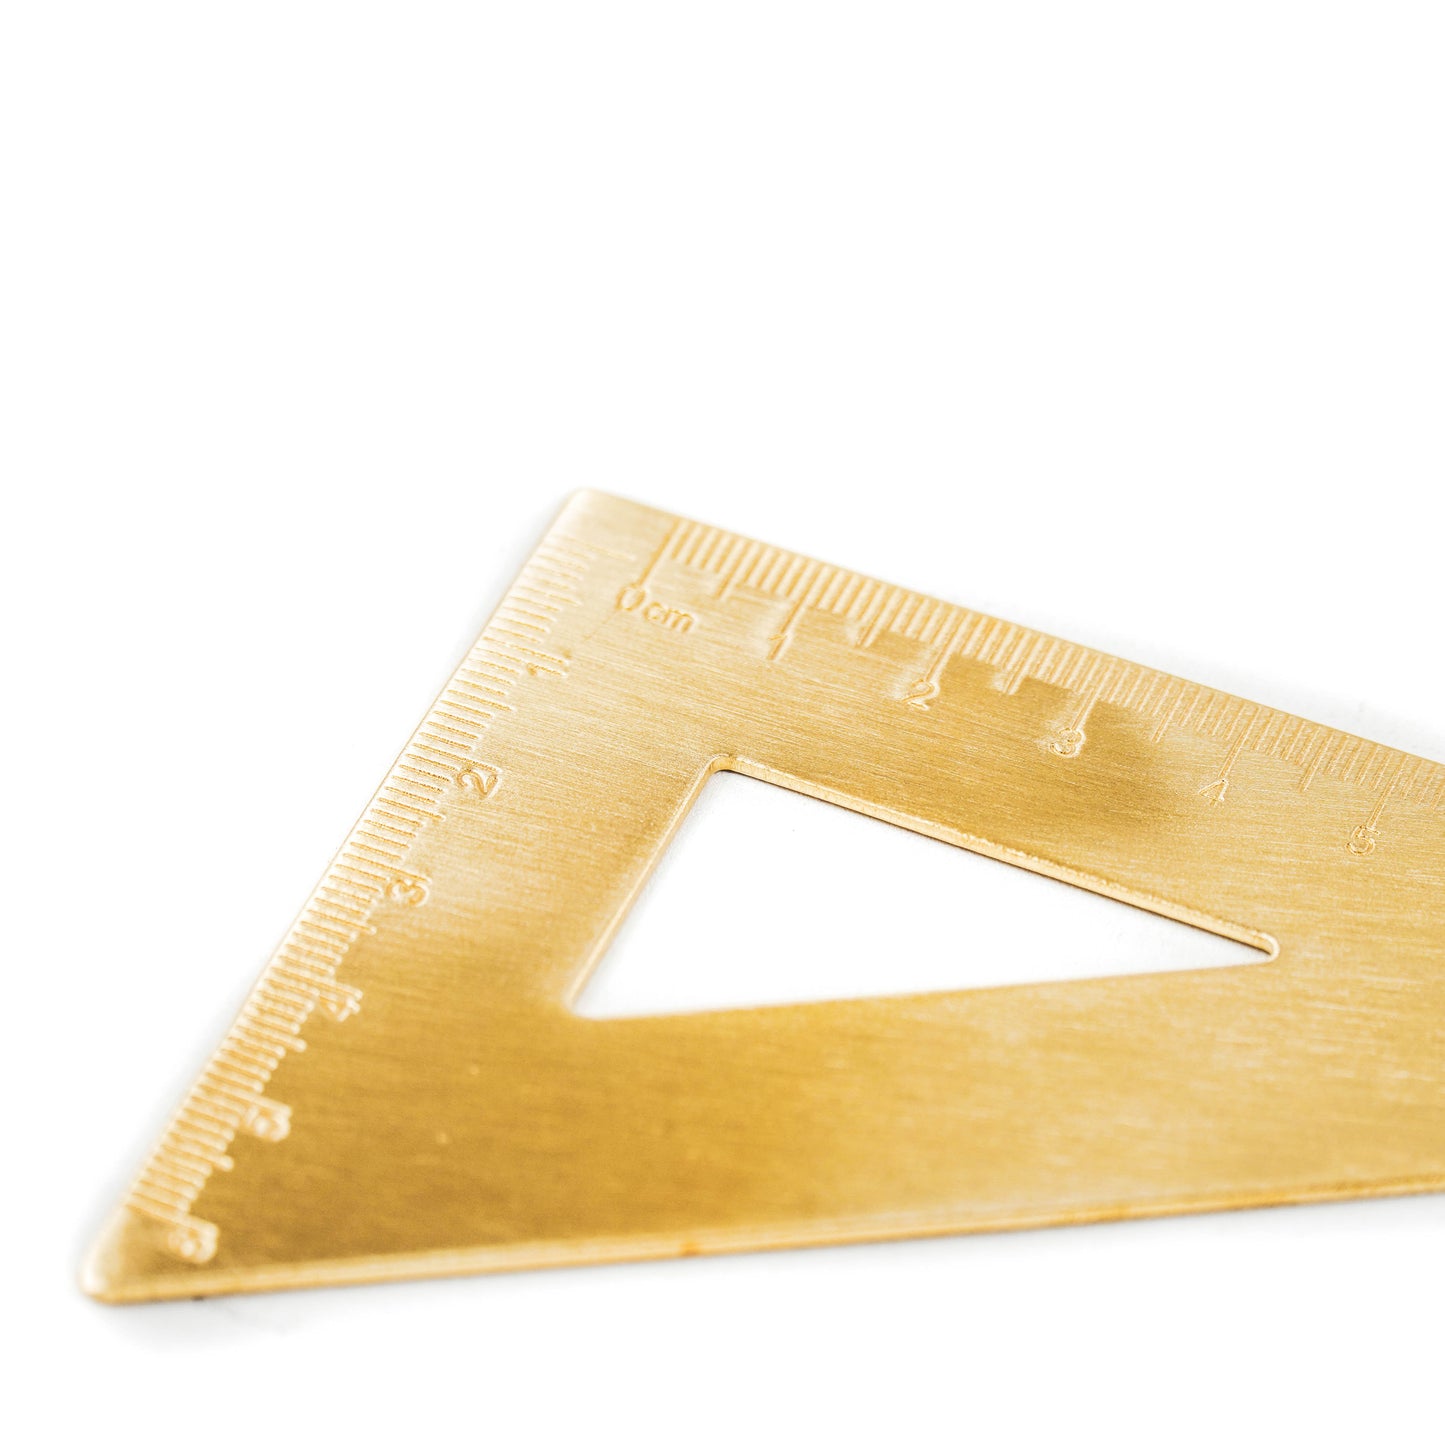 HV Golden triangle ruler - Gold